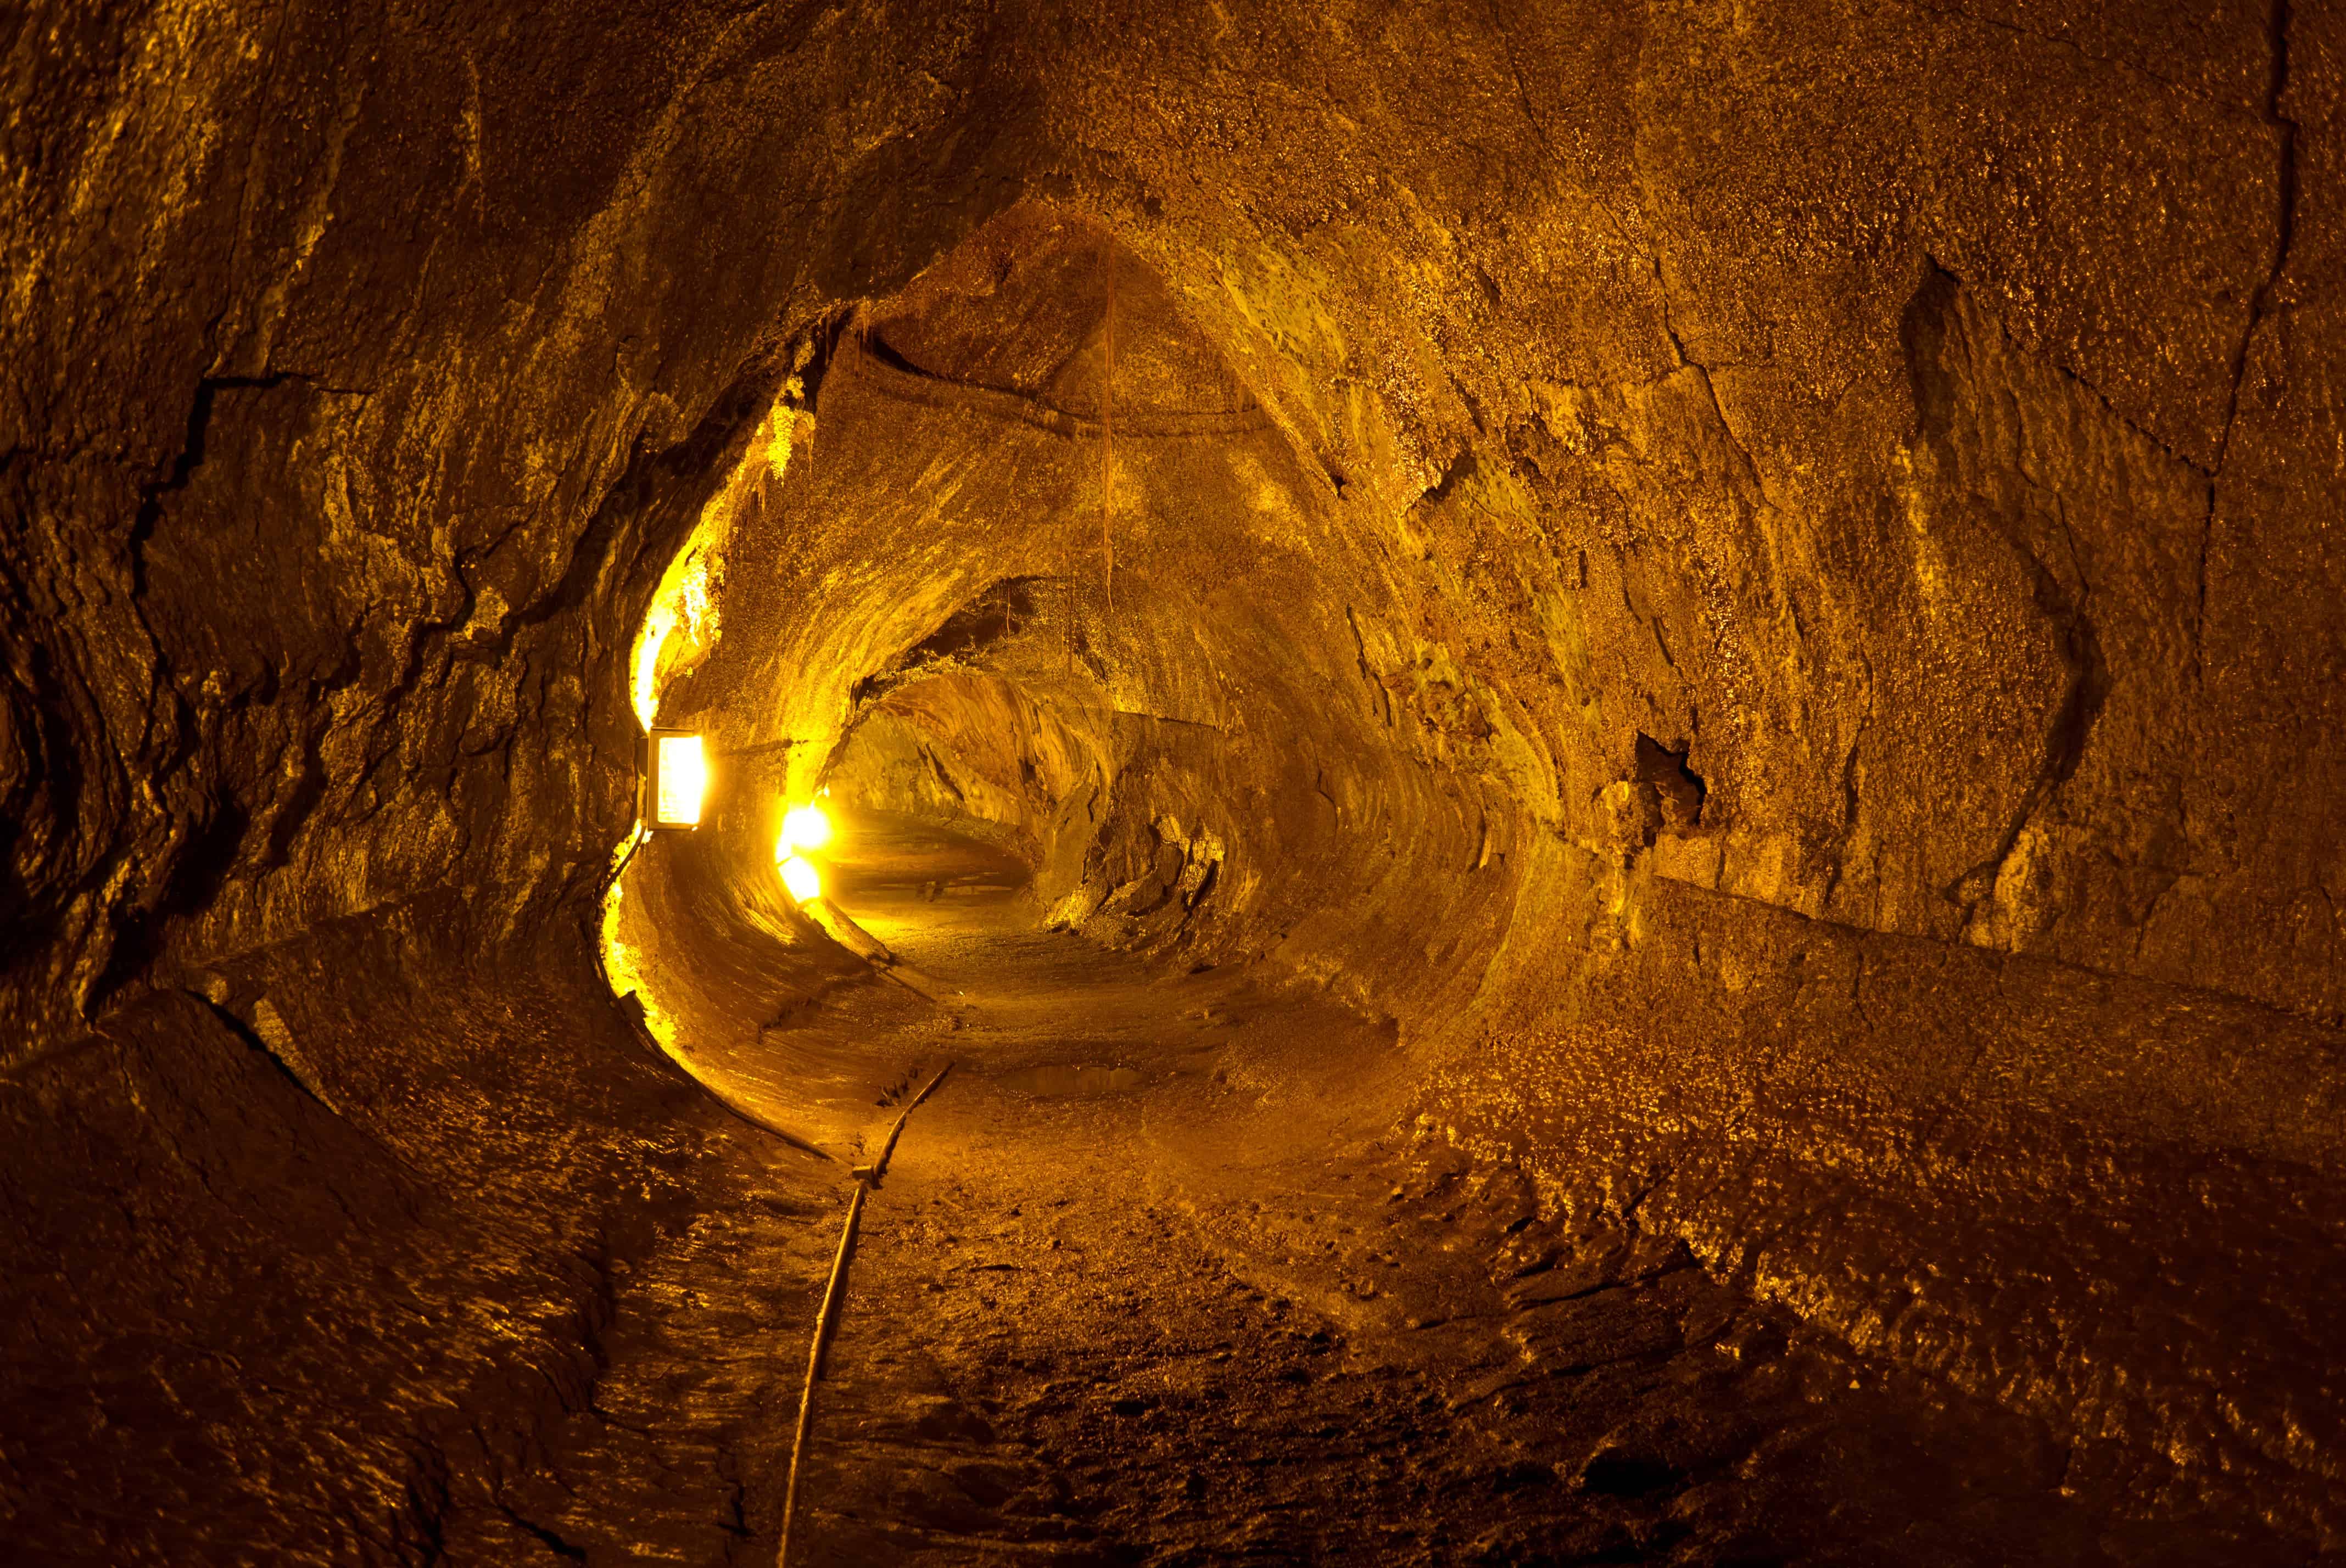 Image credits: Thurston Lava Tube at Hawaii Volcanoes National Park, Big Island, Hawaii. Credits: Frank Schulenburg.